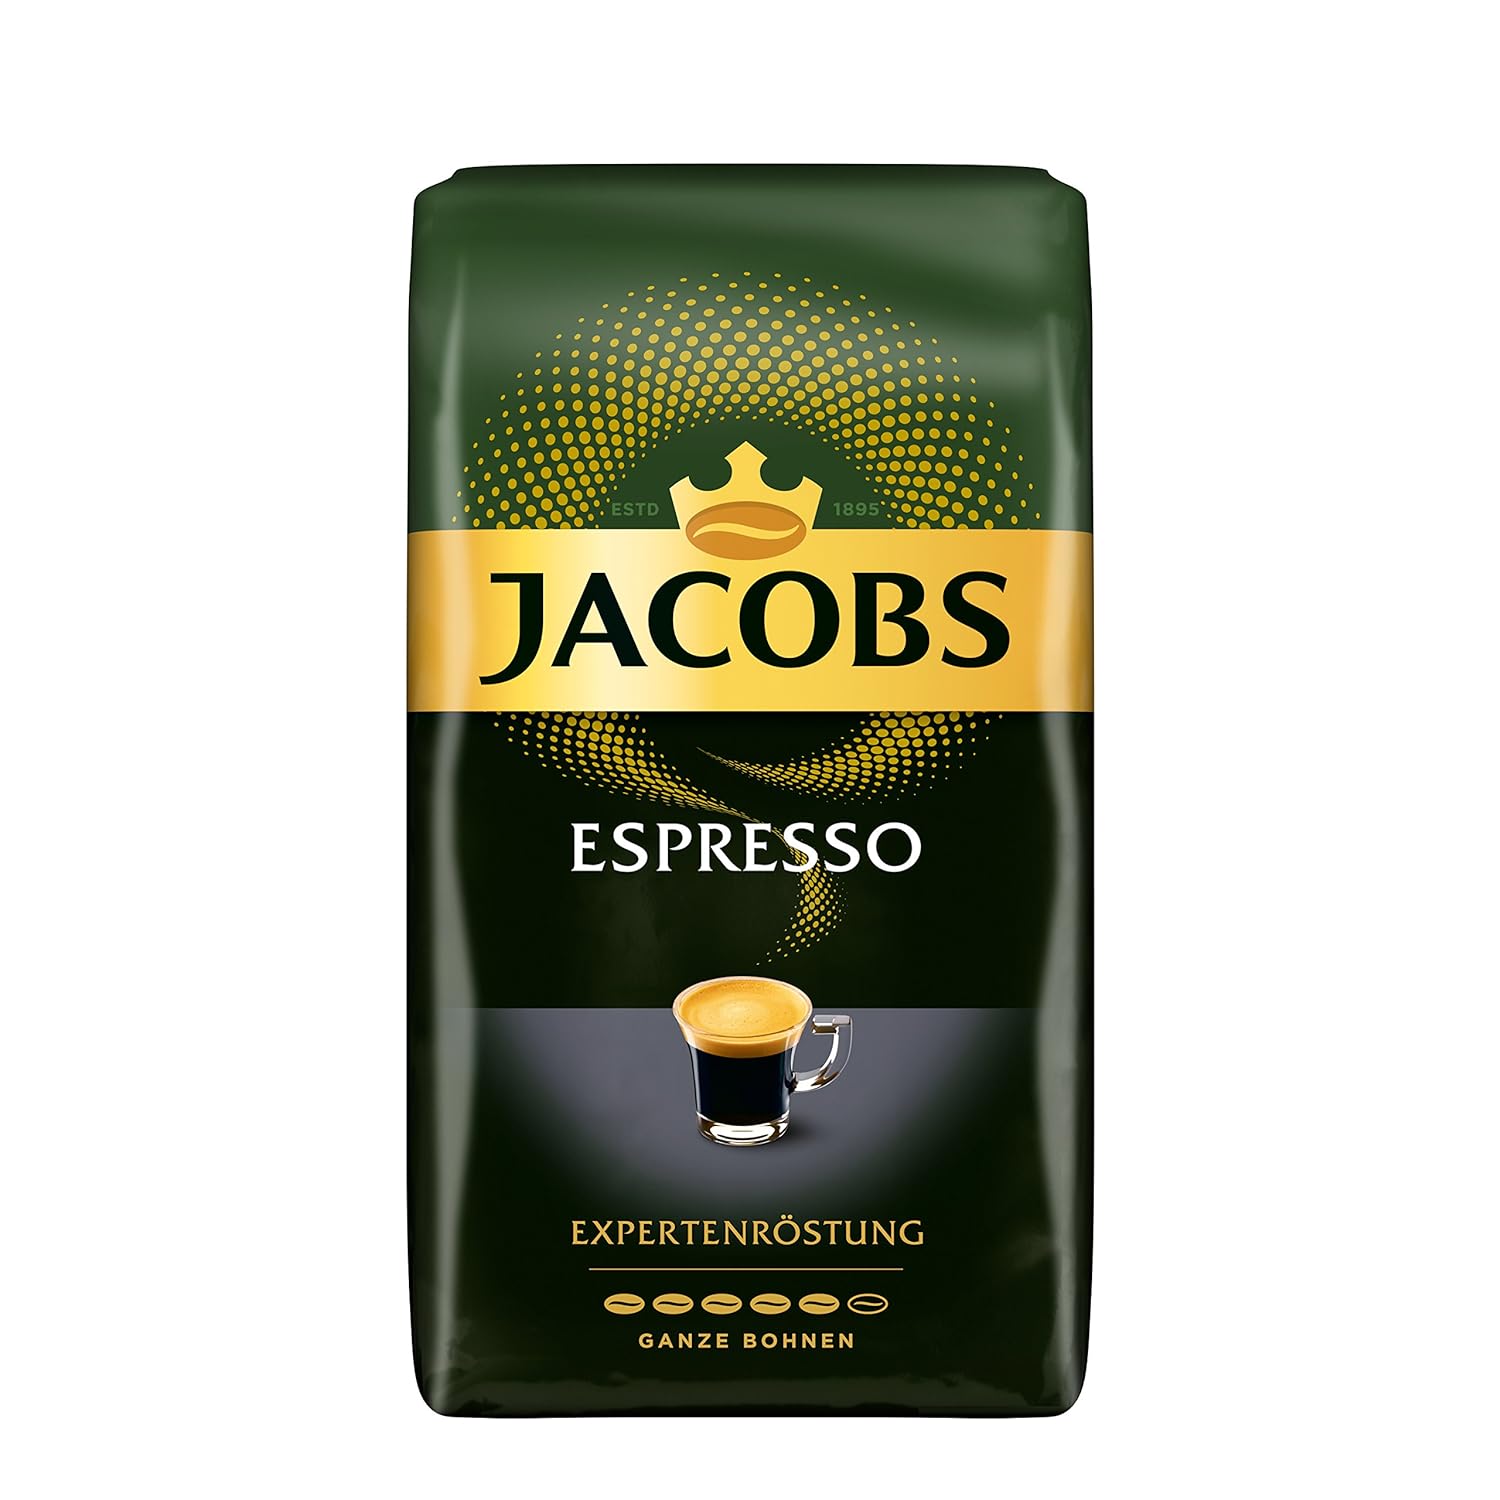 Jacobs Coffee Beans Expert Roasting Espresso Beans, 1 kg Bean Coffee